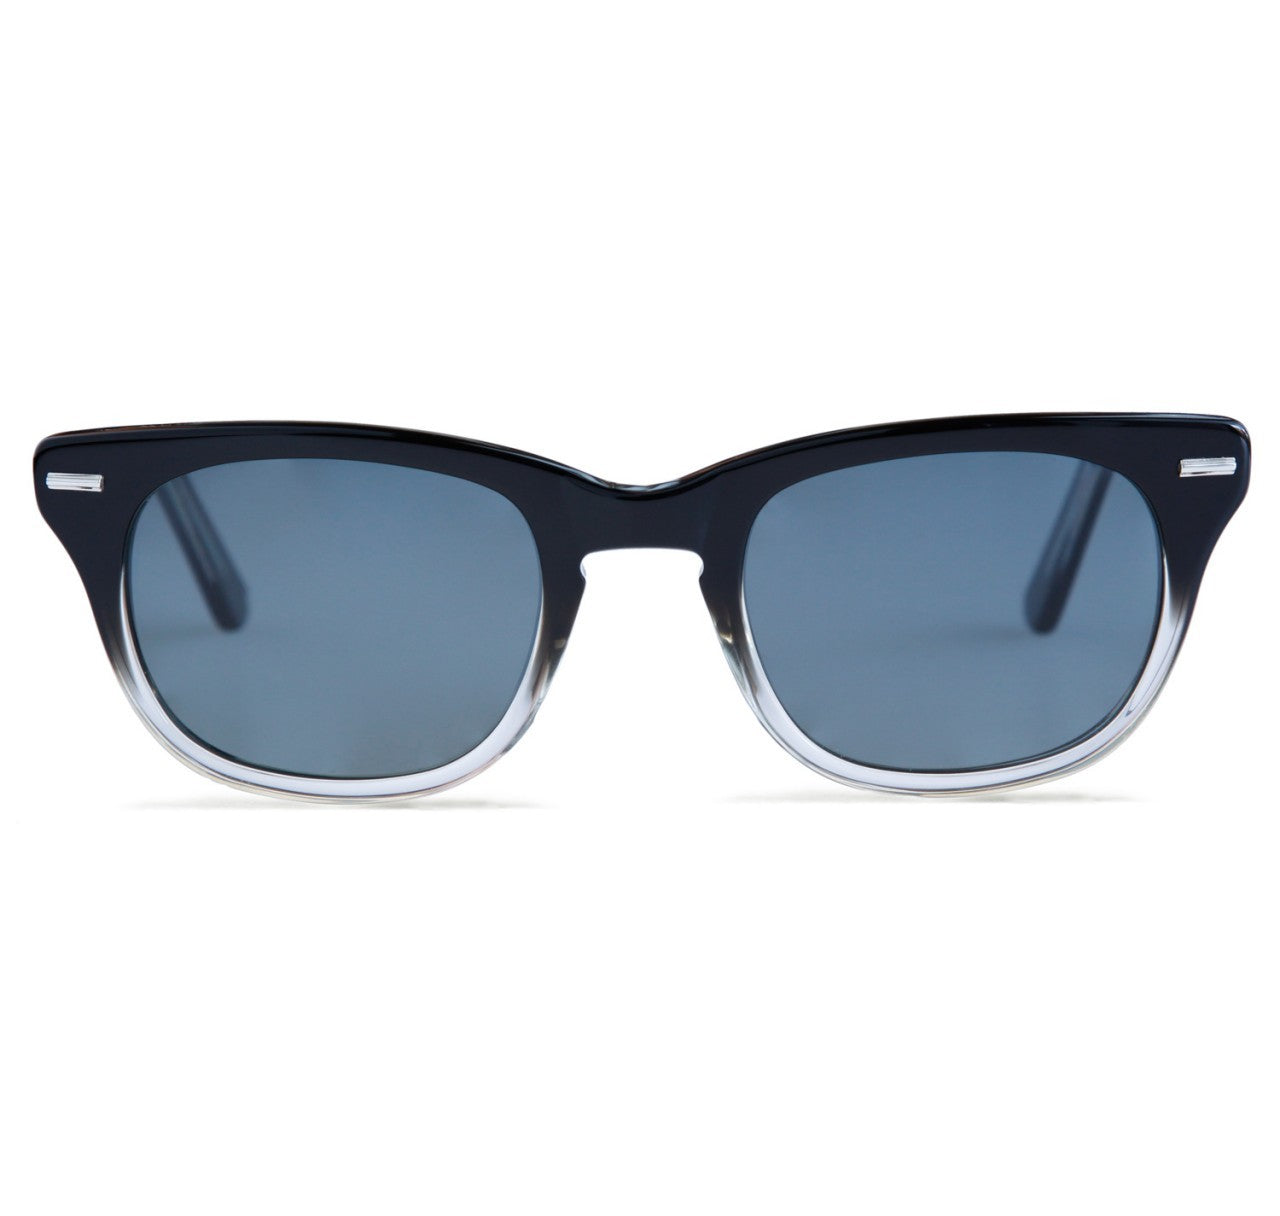 Shuron Freeway Black Fade Sunglasses